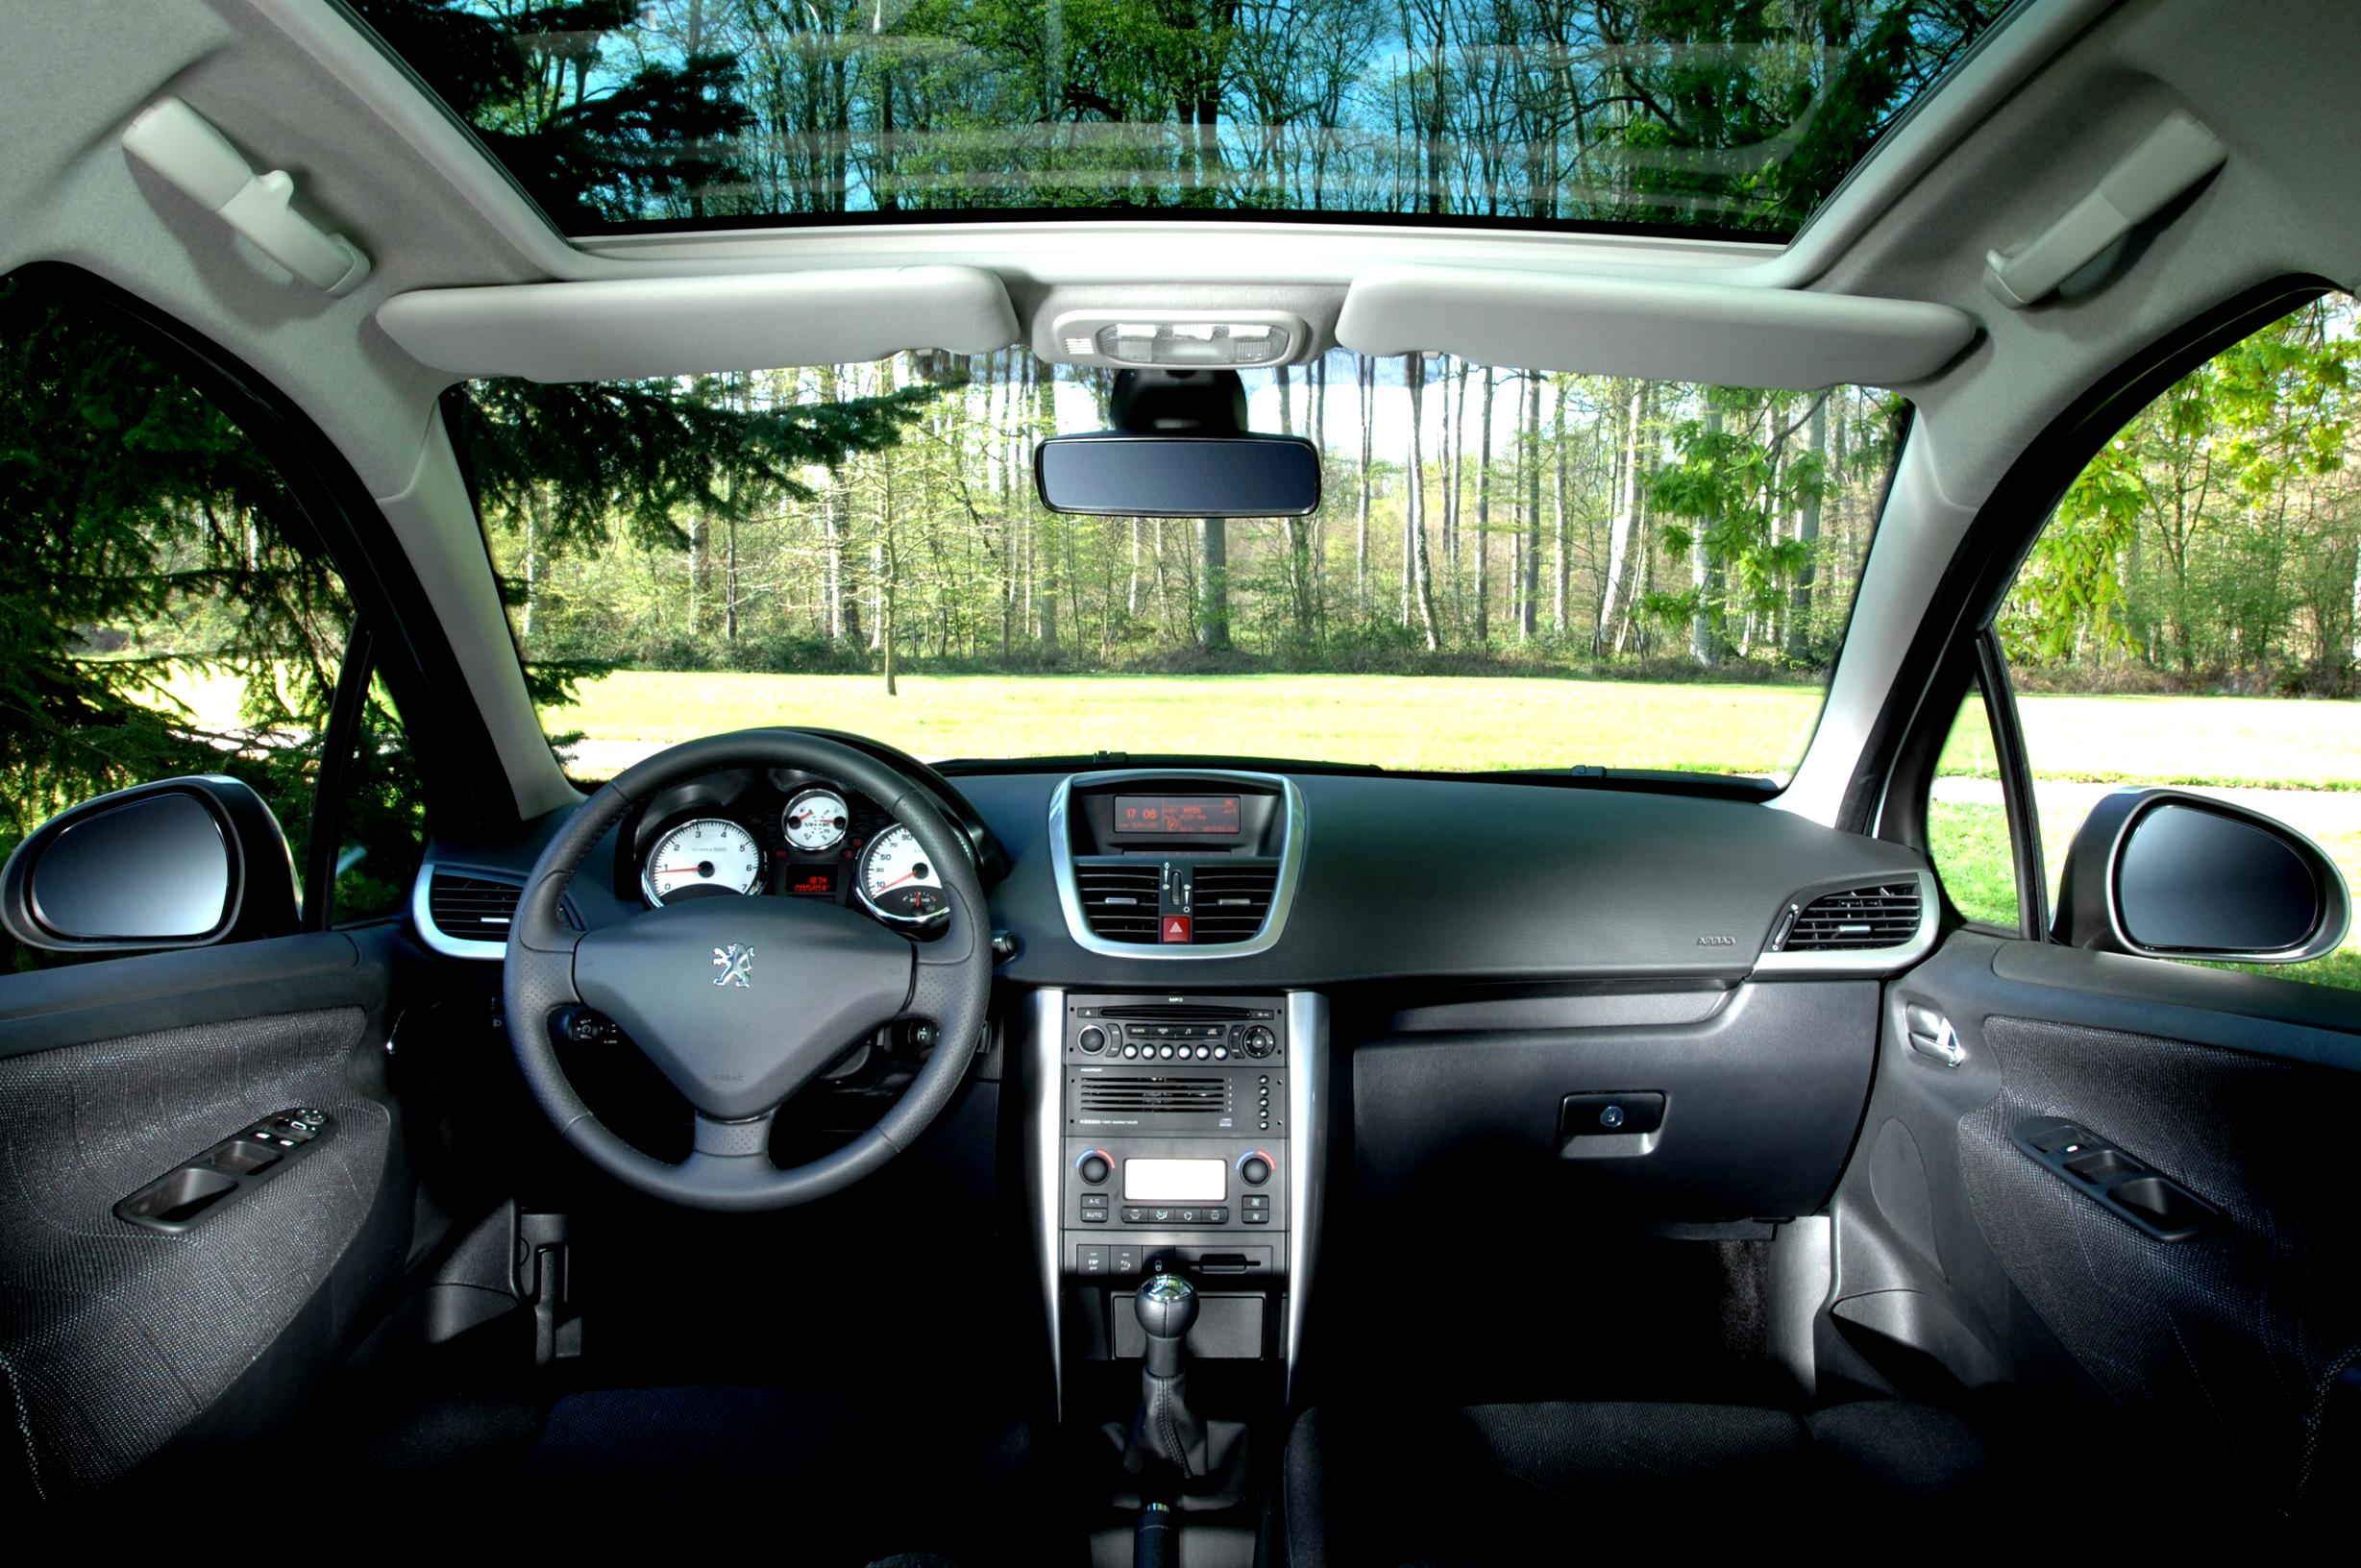 На дисплее Peugeot 207 появилось “Oil” и два прочерка фото